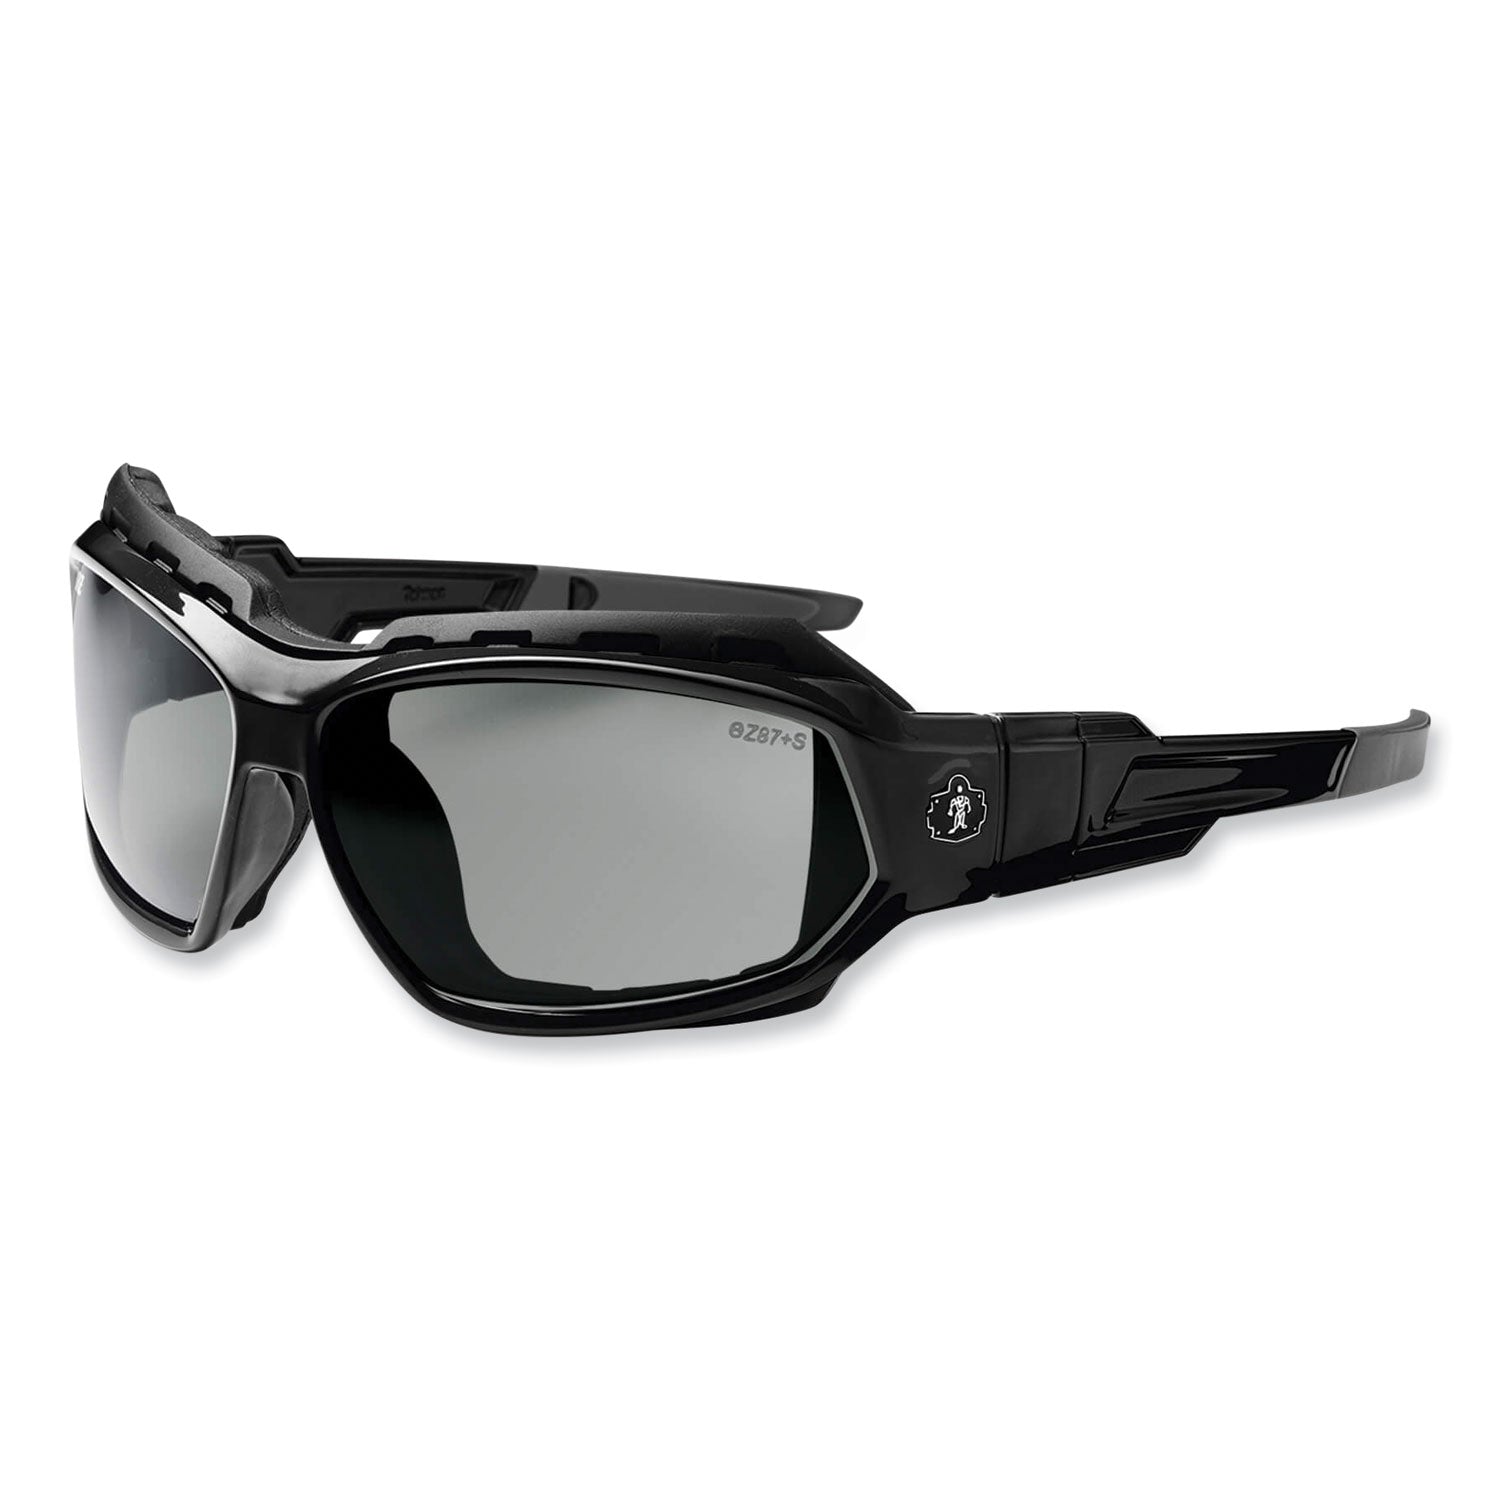 skullerz-loki-safety-glasses-goggles-black-nylon-impact-framepolarized-smoke-polycarbonate-lens-ships-in-1-3-business-days_ego56031 - 2